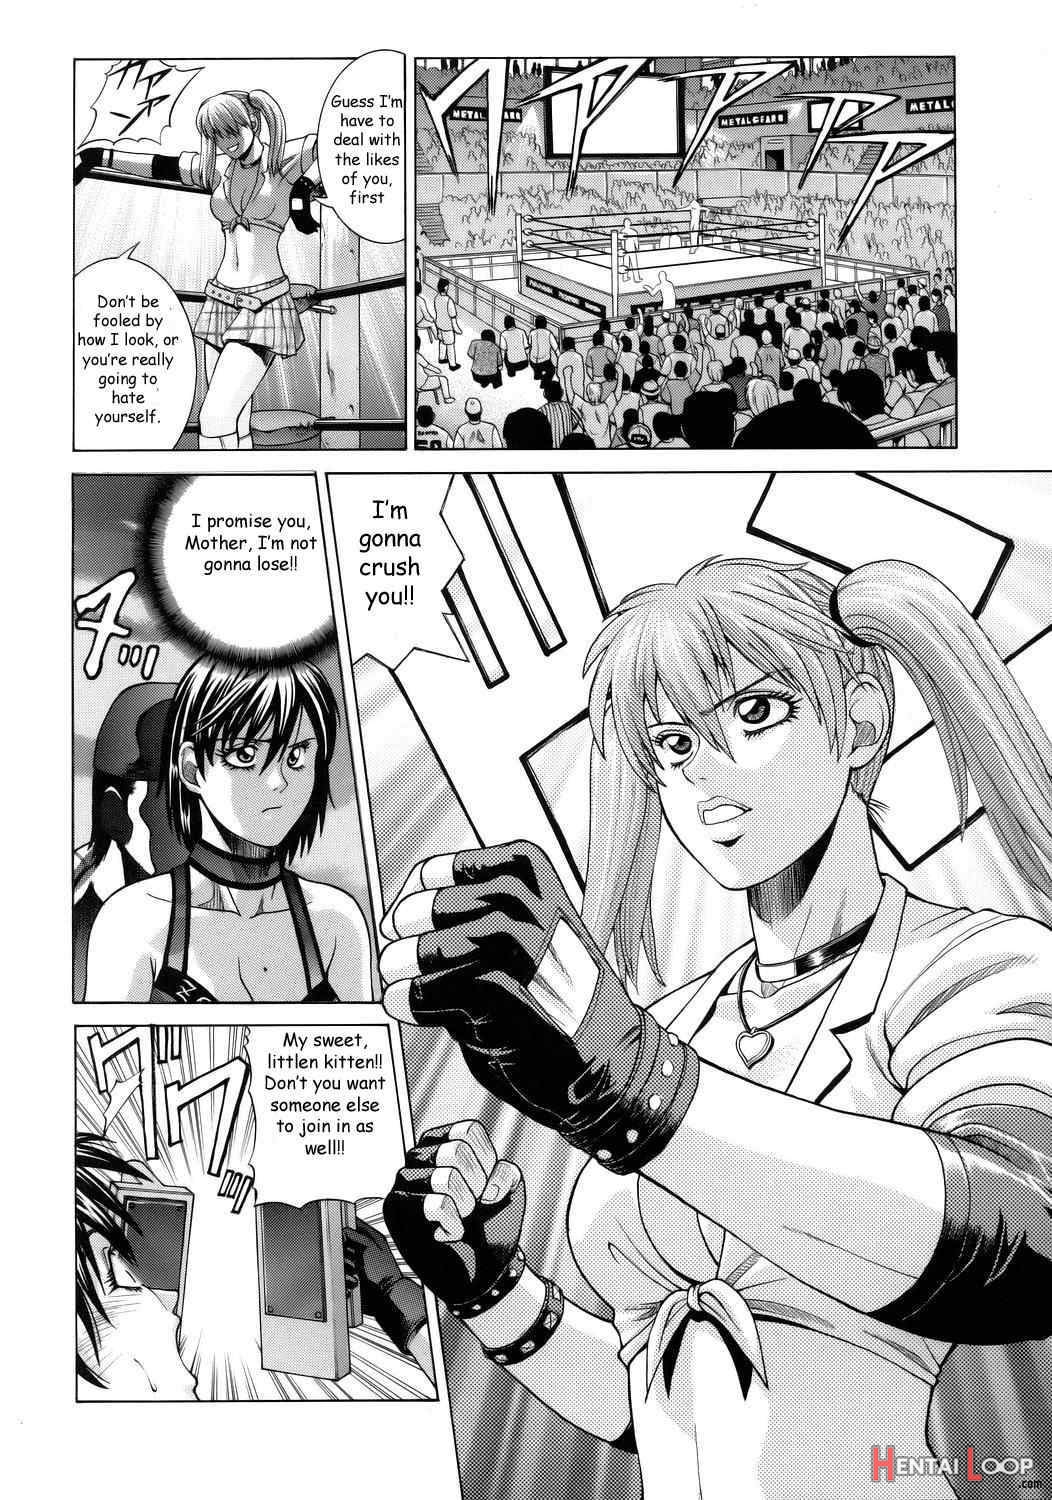 Reiko page 4